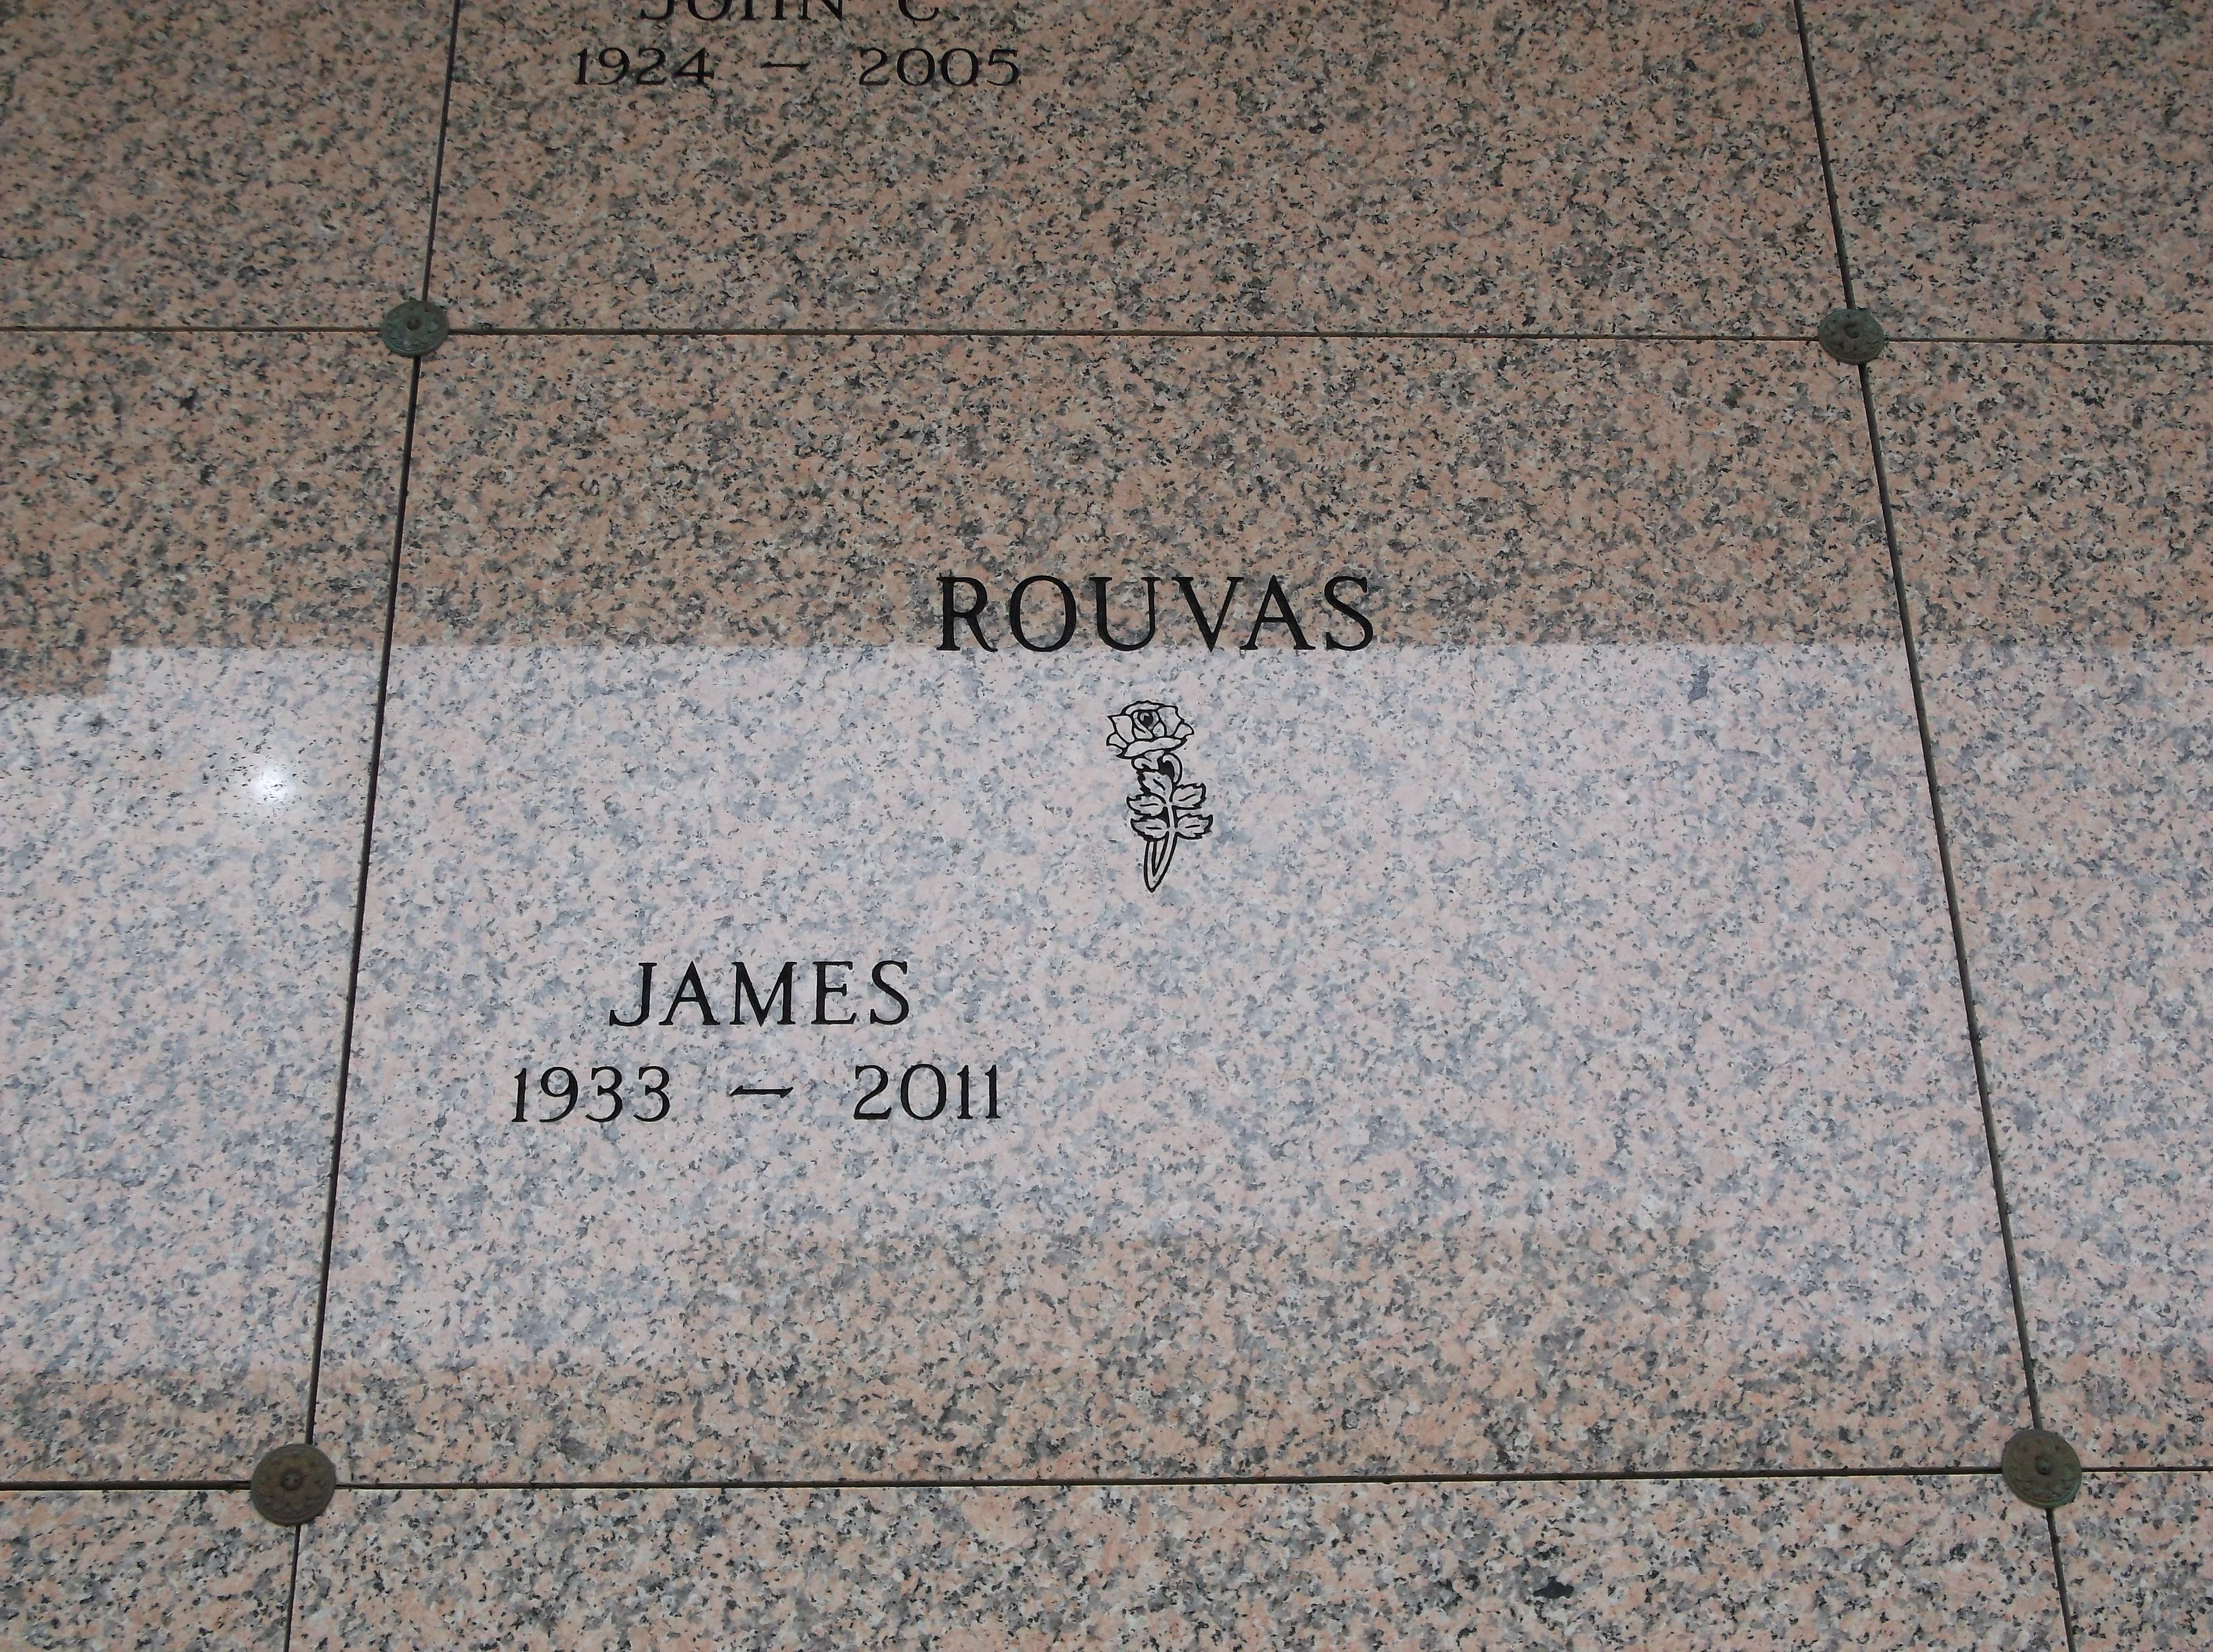 James Rouvas